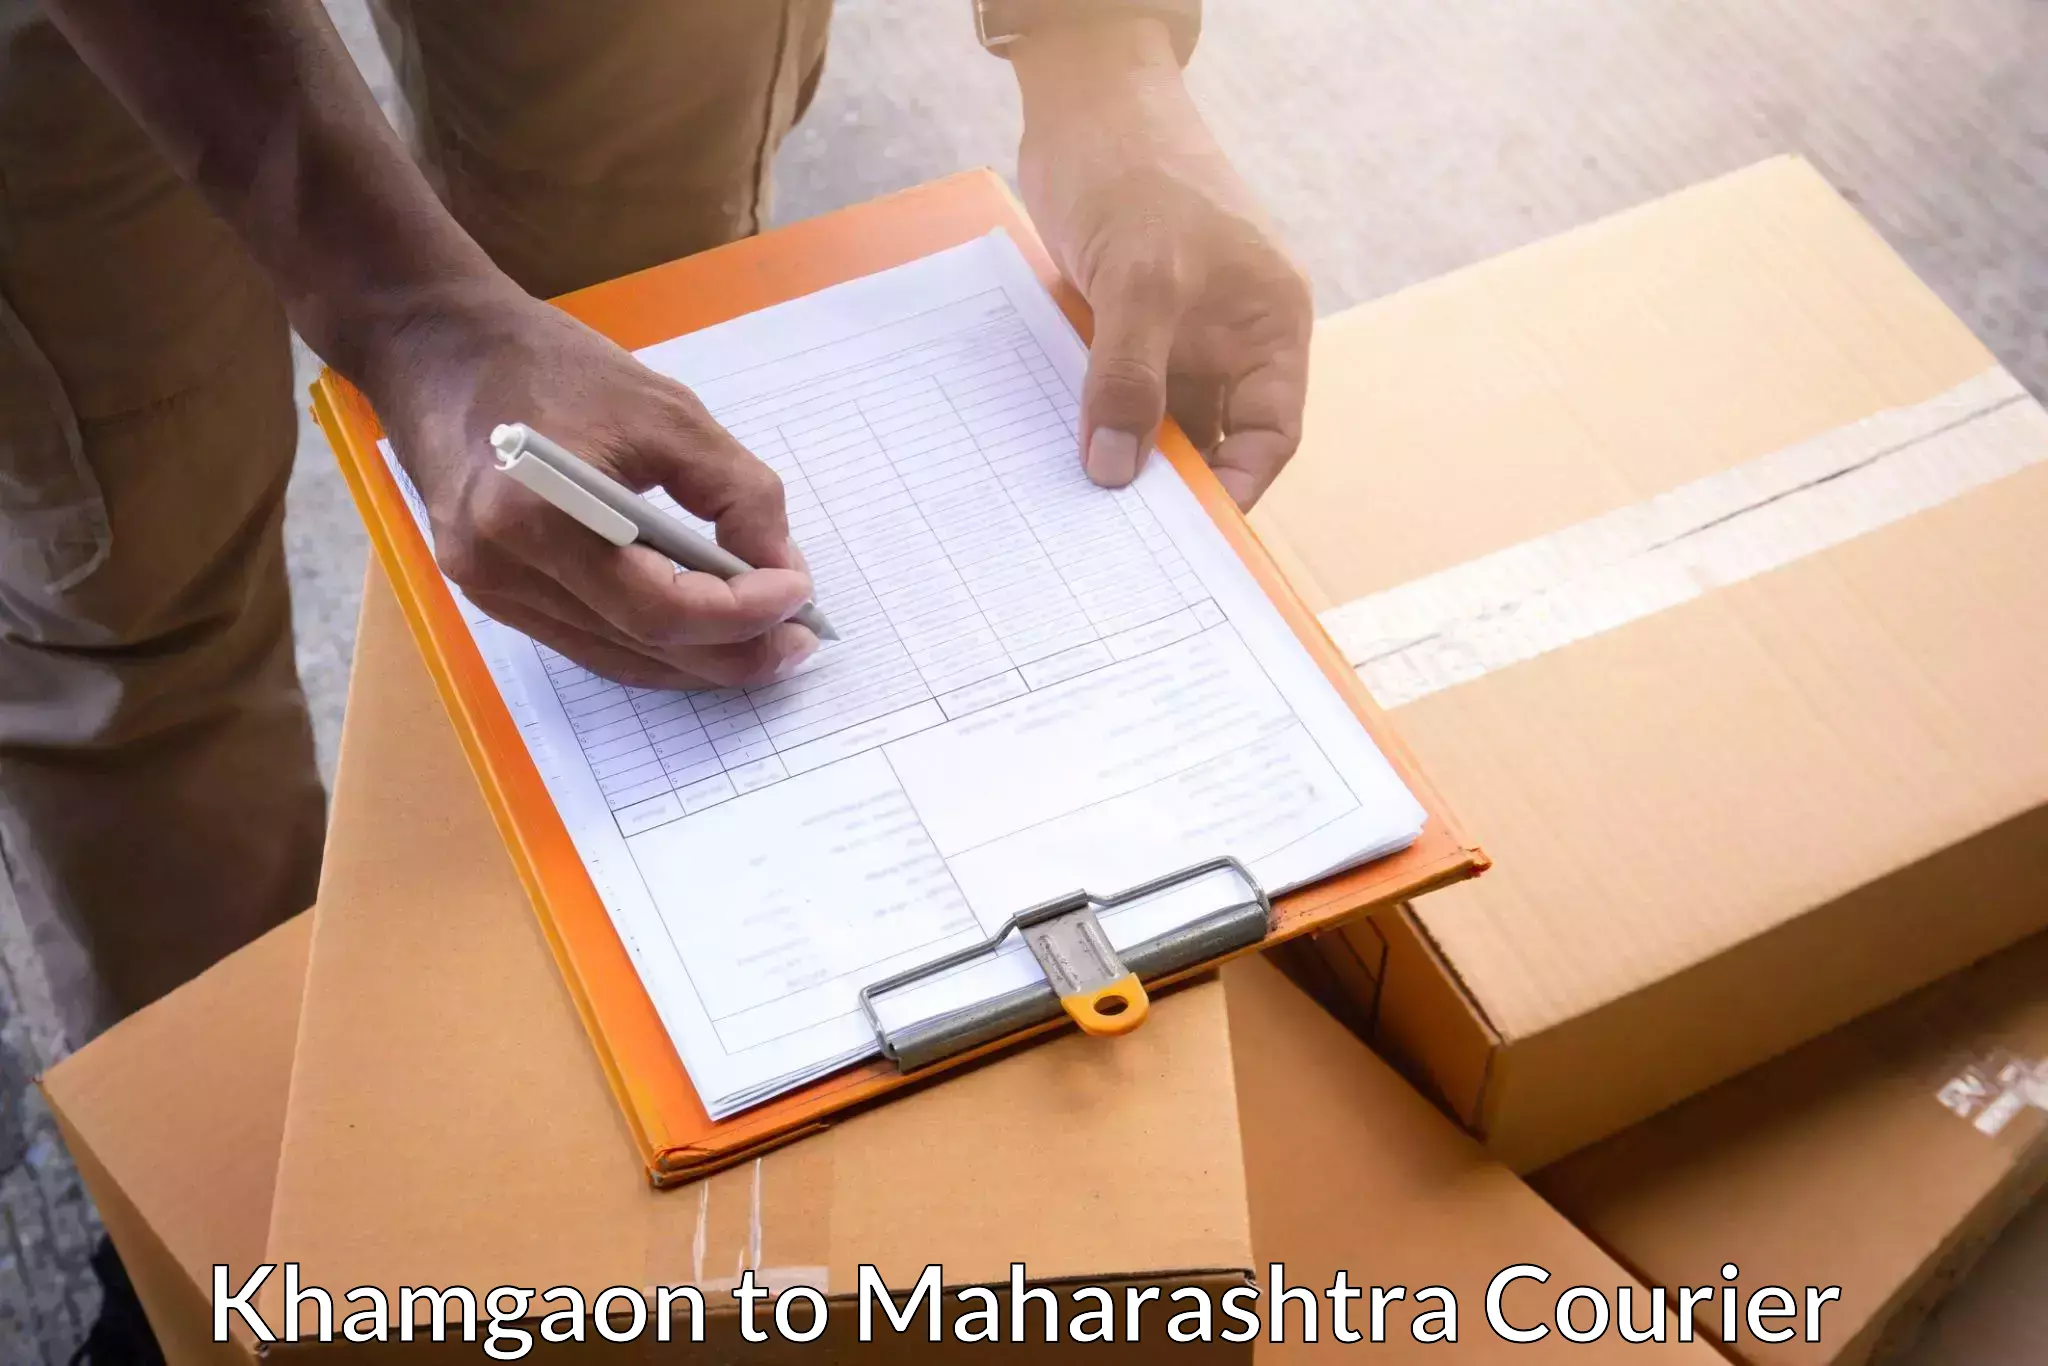 24-hour courier service Khamgaon to Mumbai Port